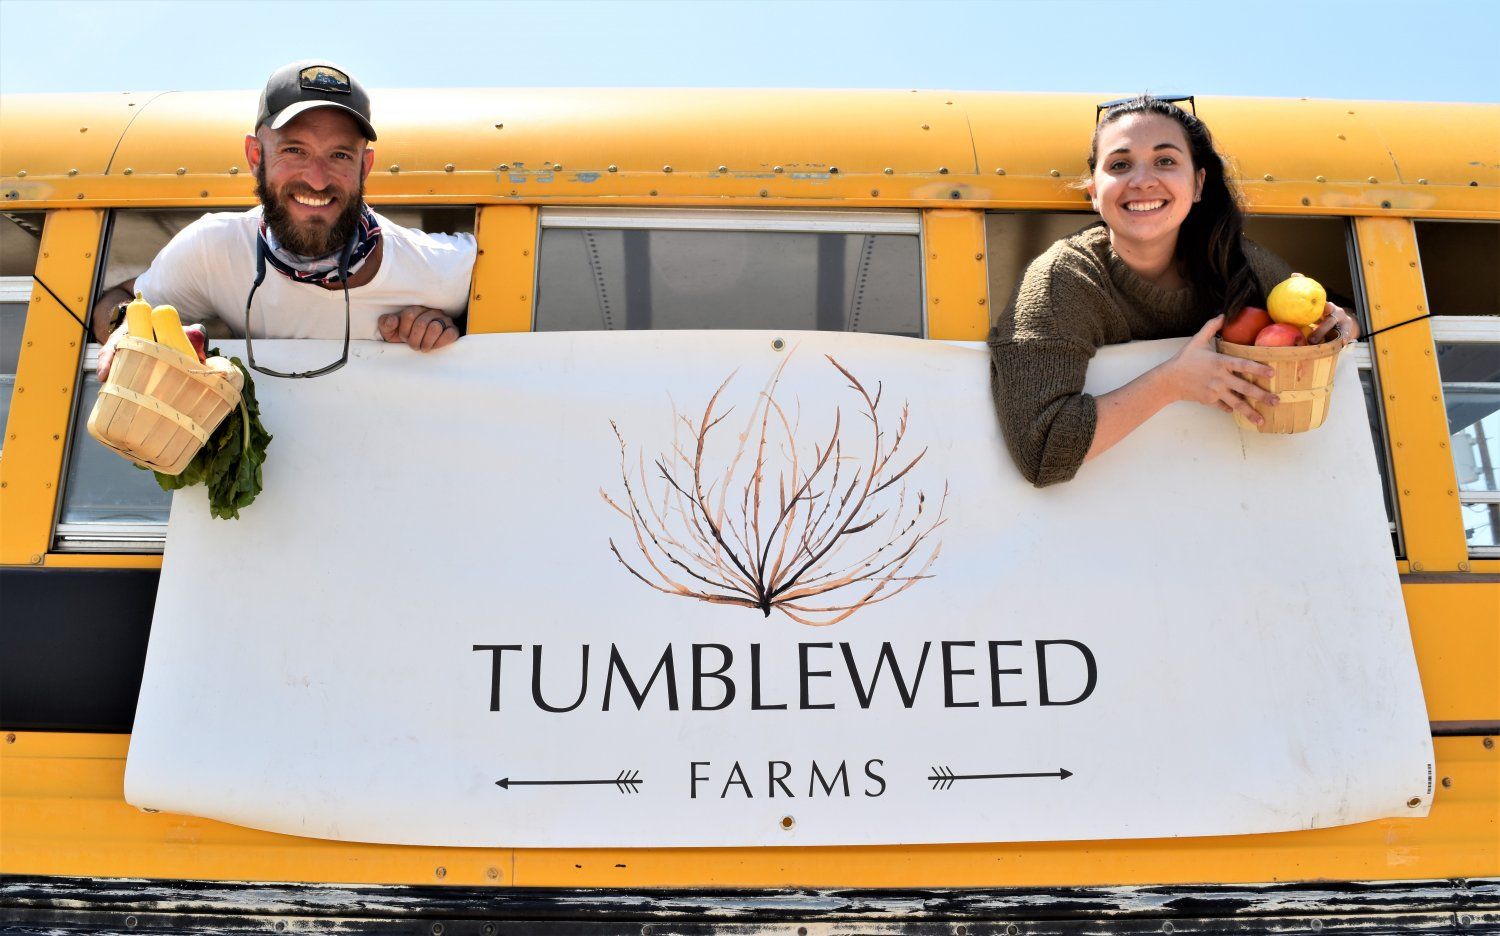 Next Happening: Tumbleweed happening, September 1st